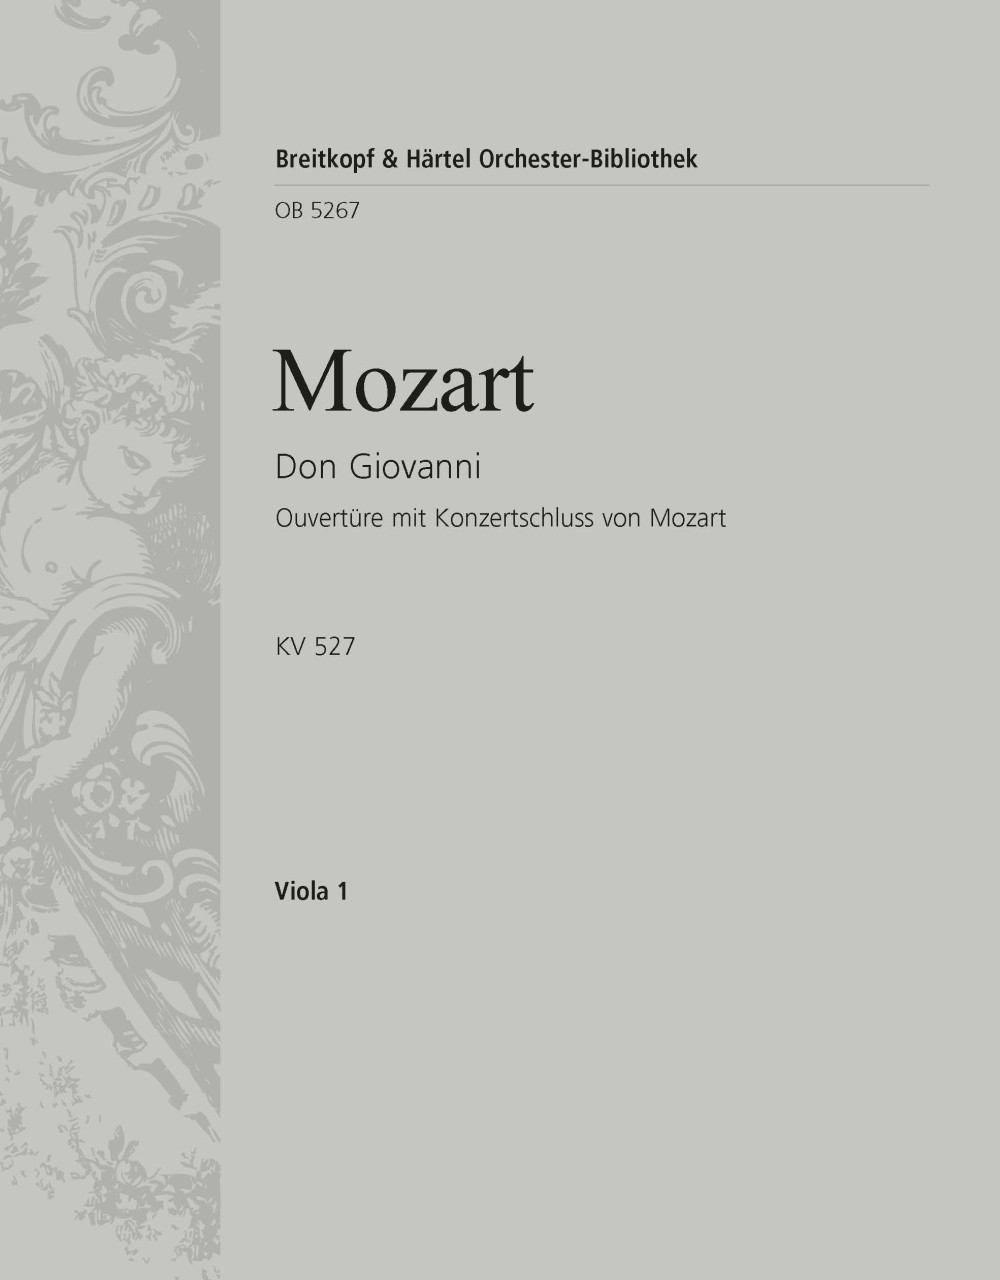 Don Giovanni Kv 527. Ouvertüre